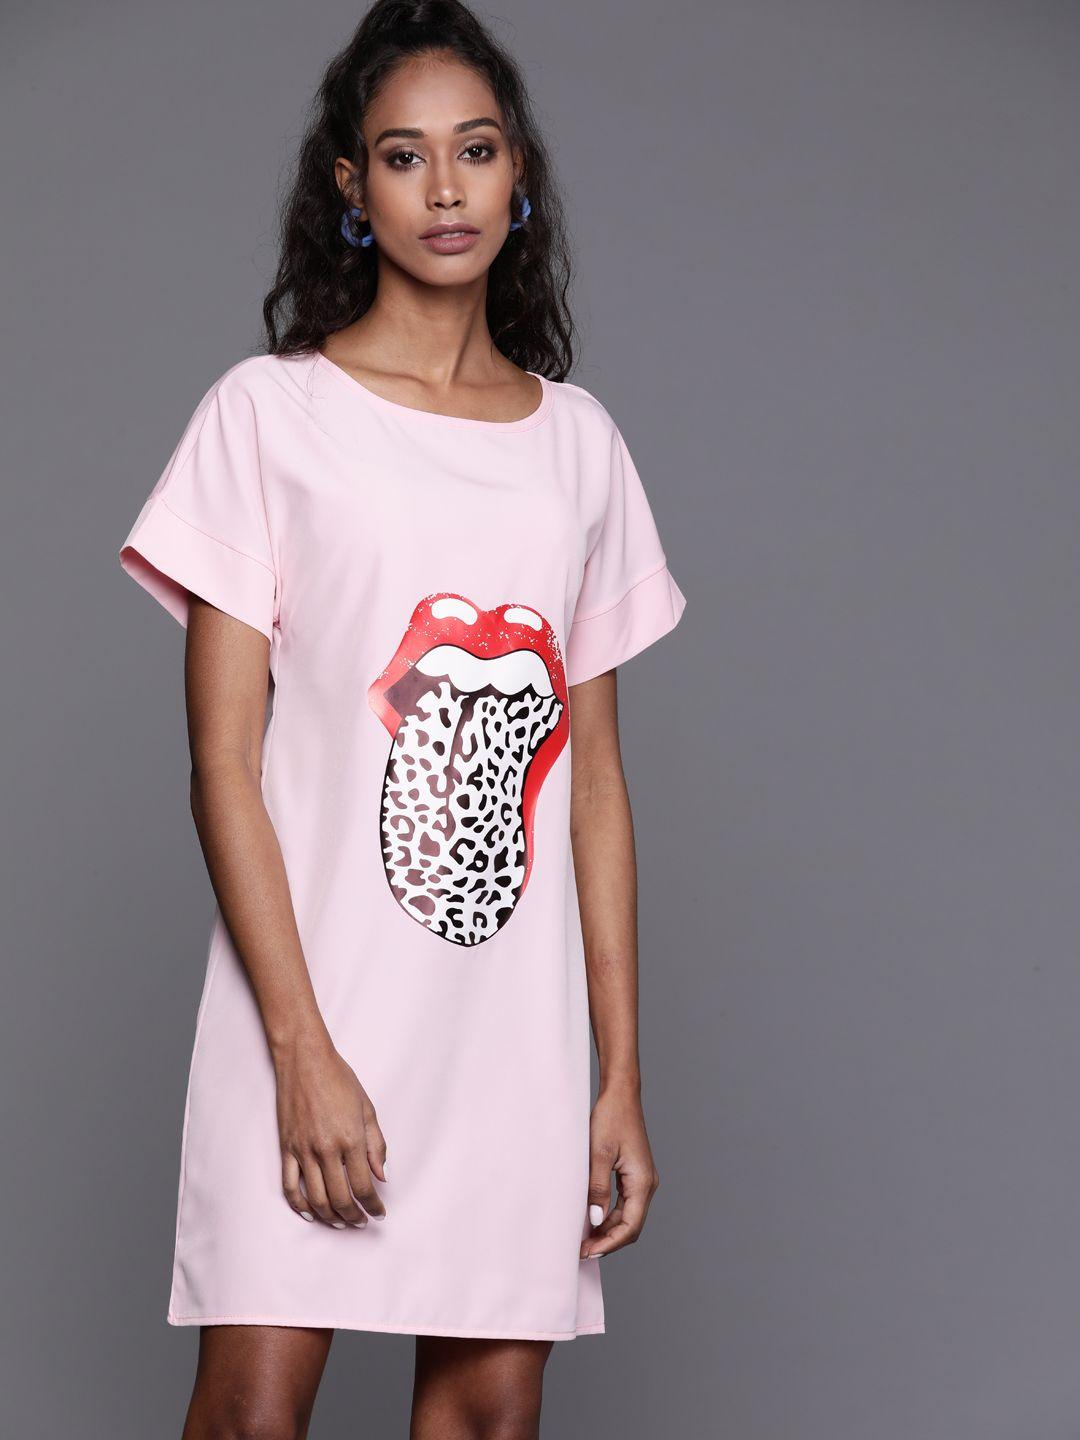 jc mode pink & white rolling stones print t-shirt dress